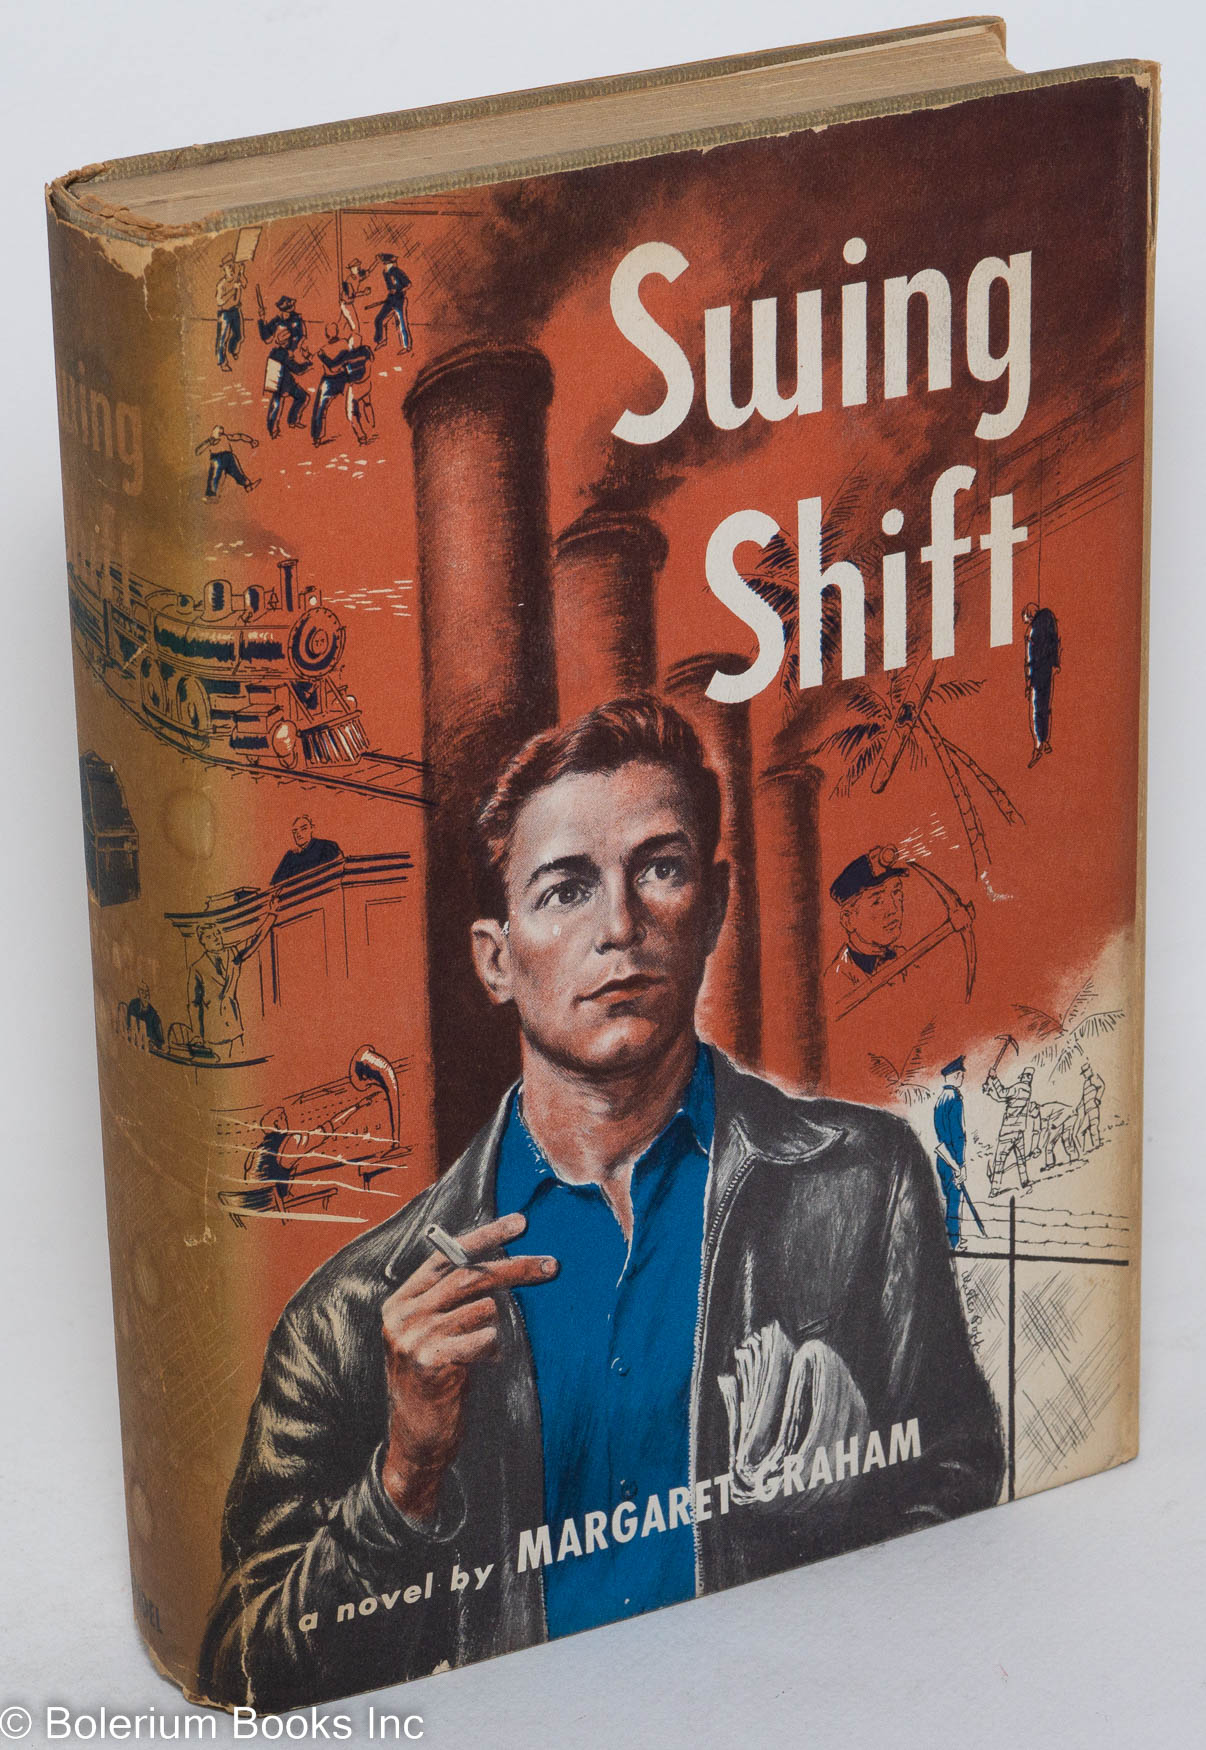 Swing shift; a novel by Margaret Graham [pseud.] by McDonald, Grace Lois  [as Margaret Graham]: Hardcover (1951)